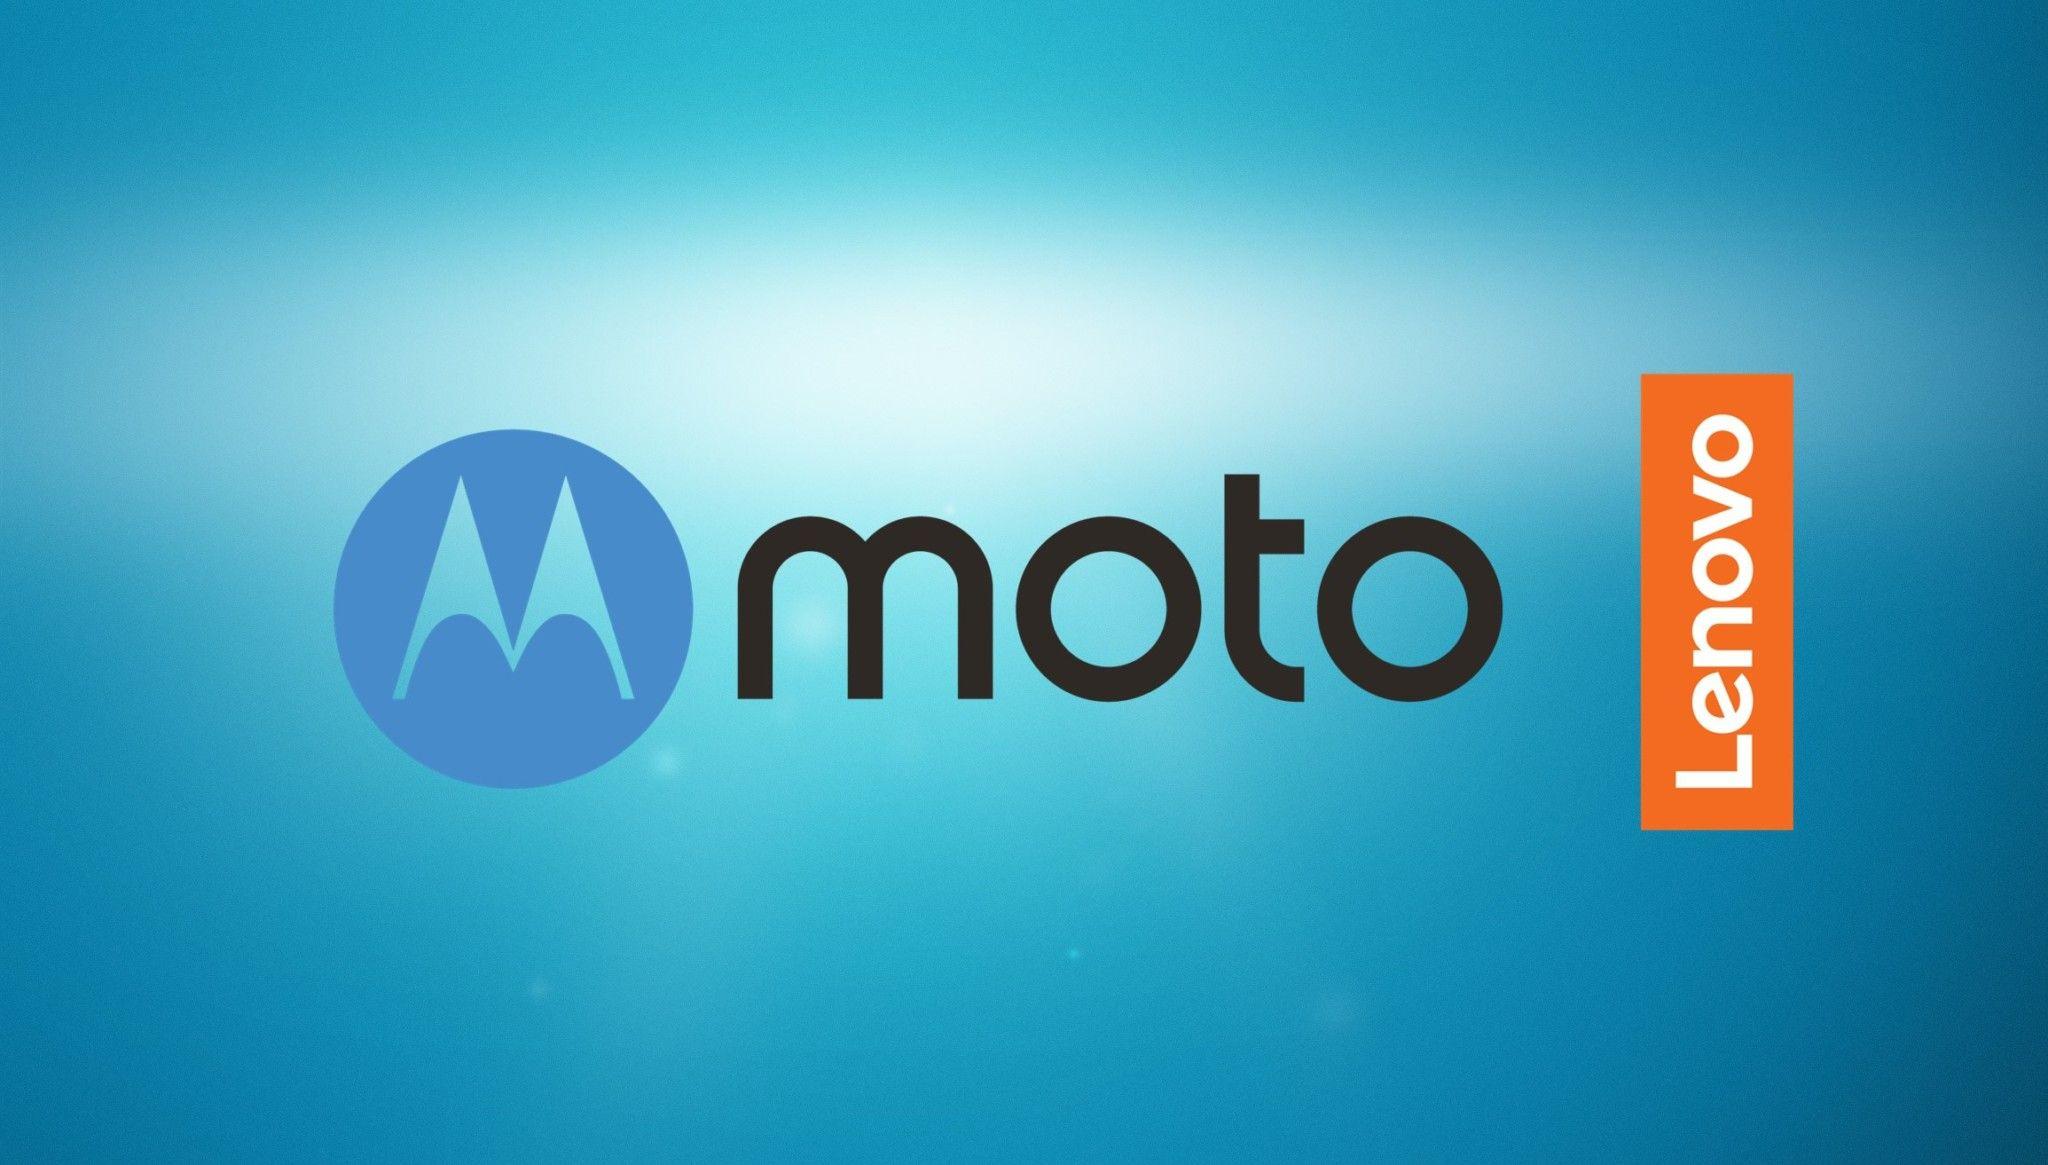 Motorola 2018 Logo - Motorola To Release G E5 and X5 Next Year